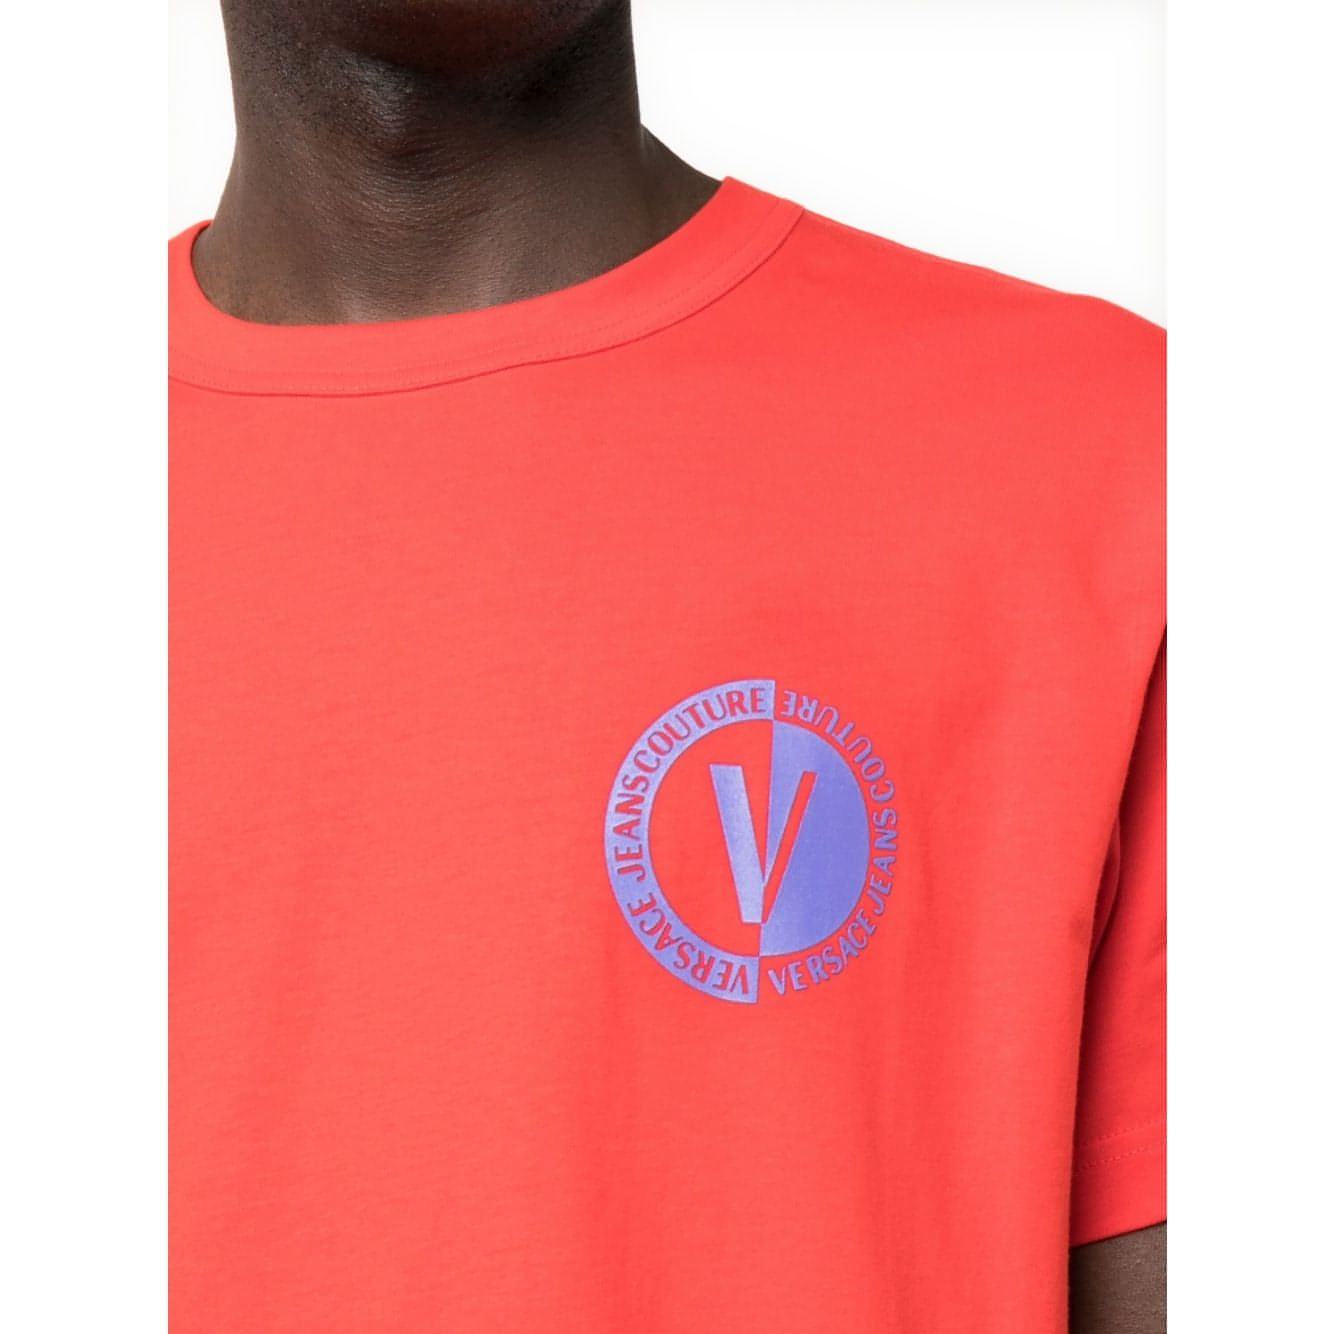 VERSACE JEANS COUTURE vyriški raudoni marškinėliai New vemblem small t-shirt